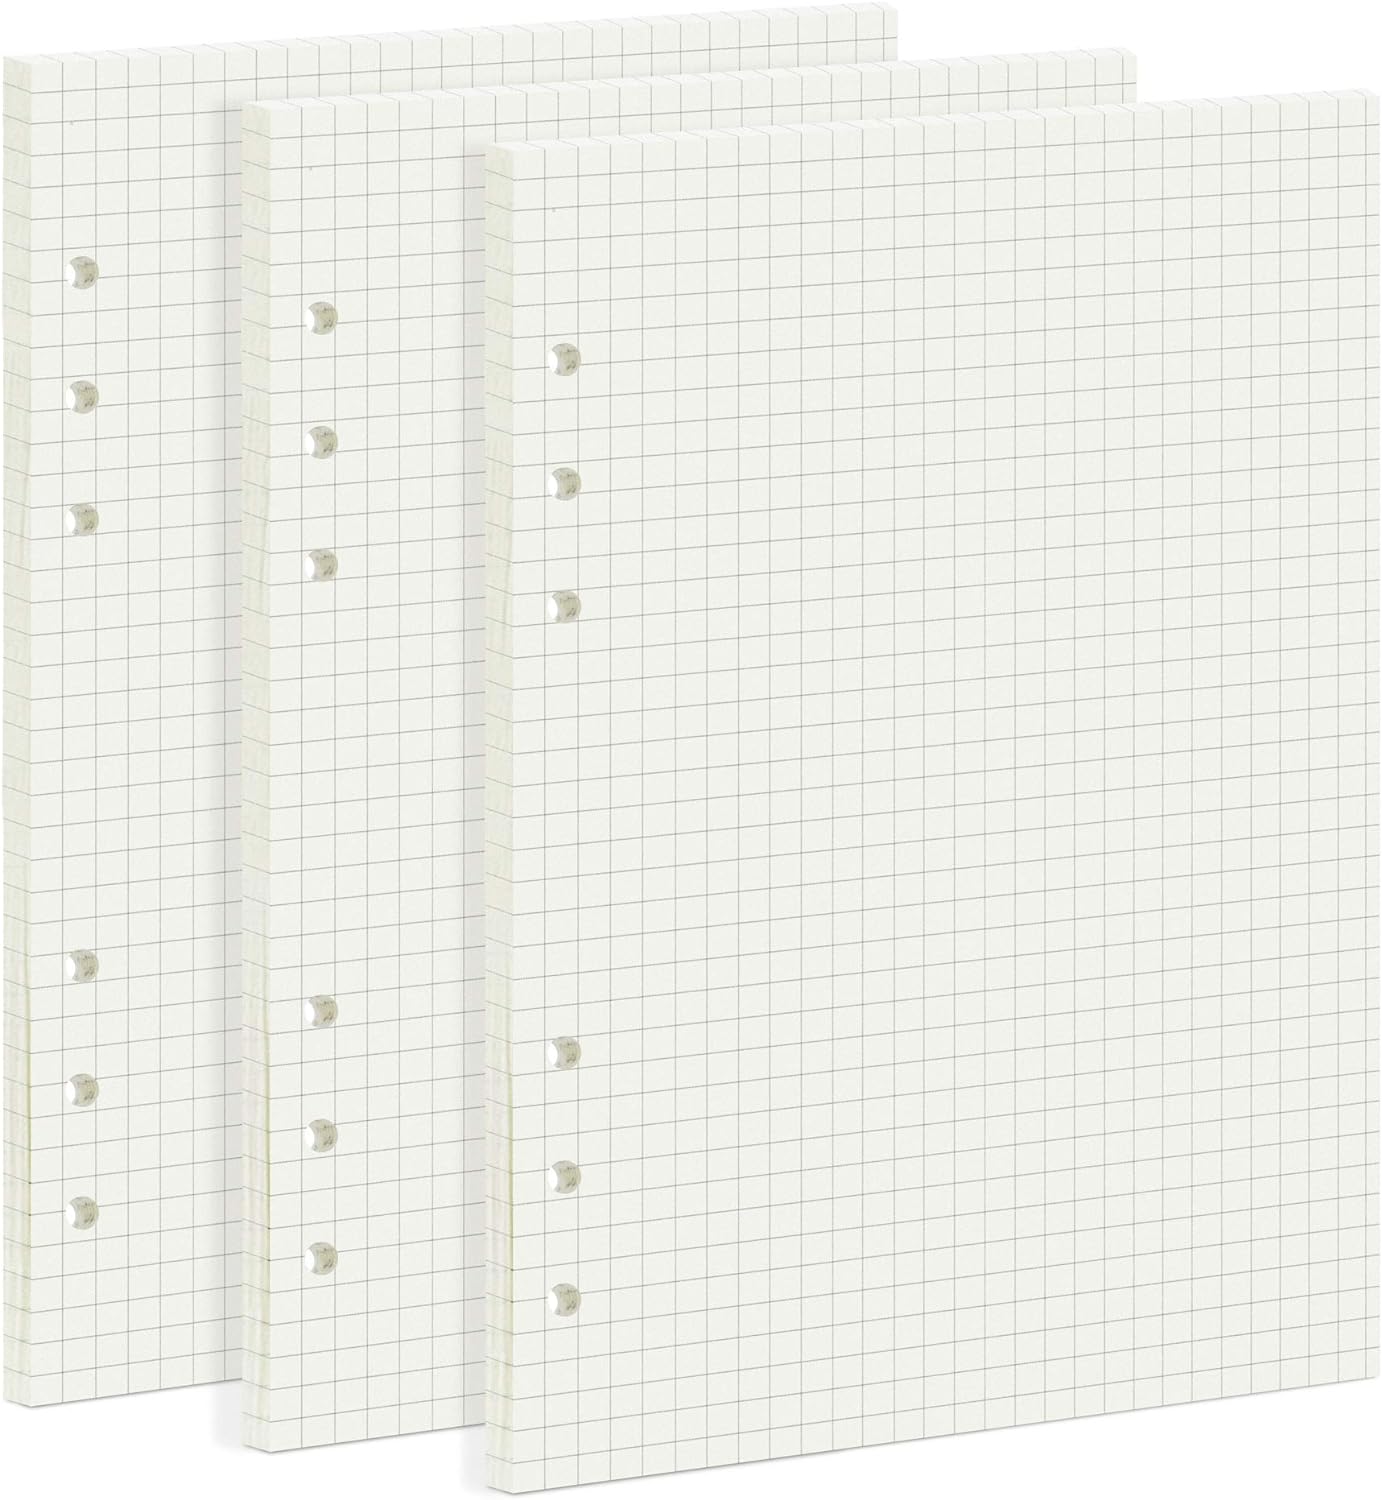 Grid Paper Inserts from Leuchtturm1917